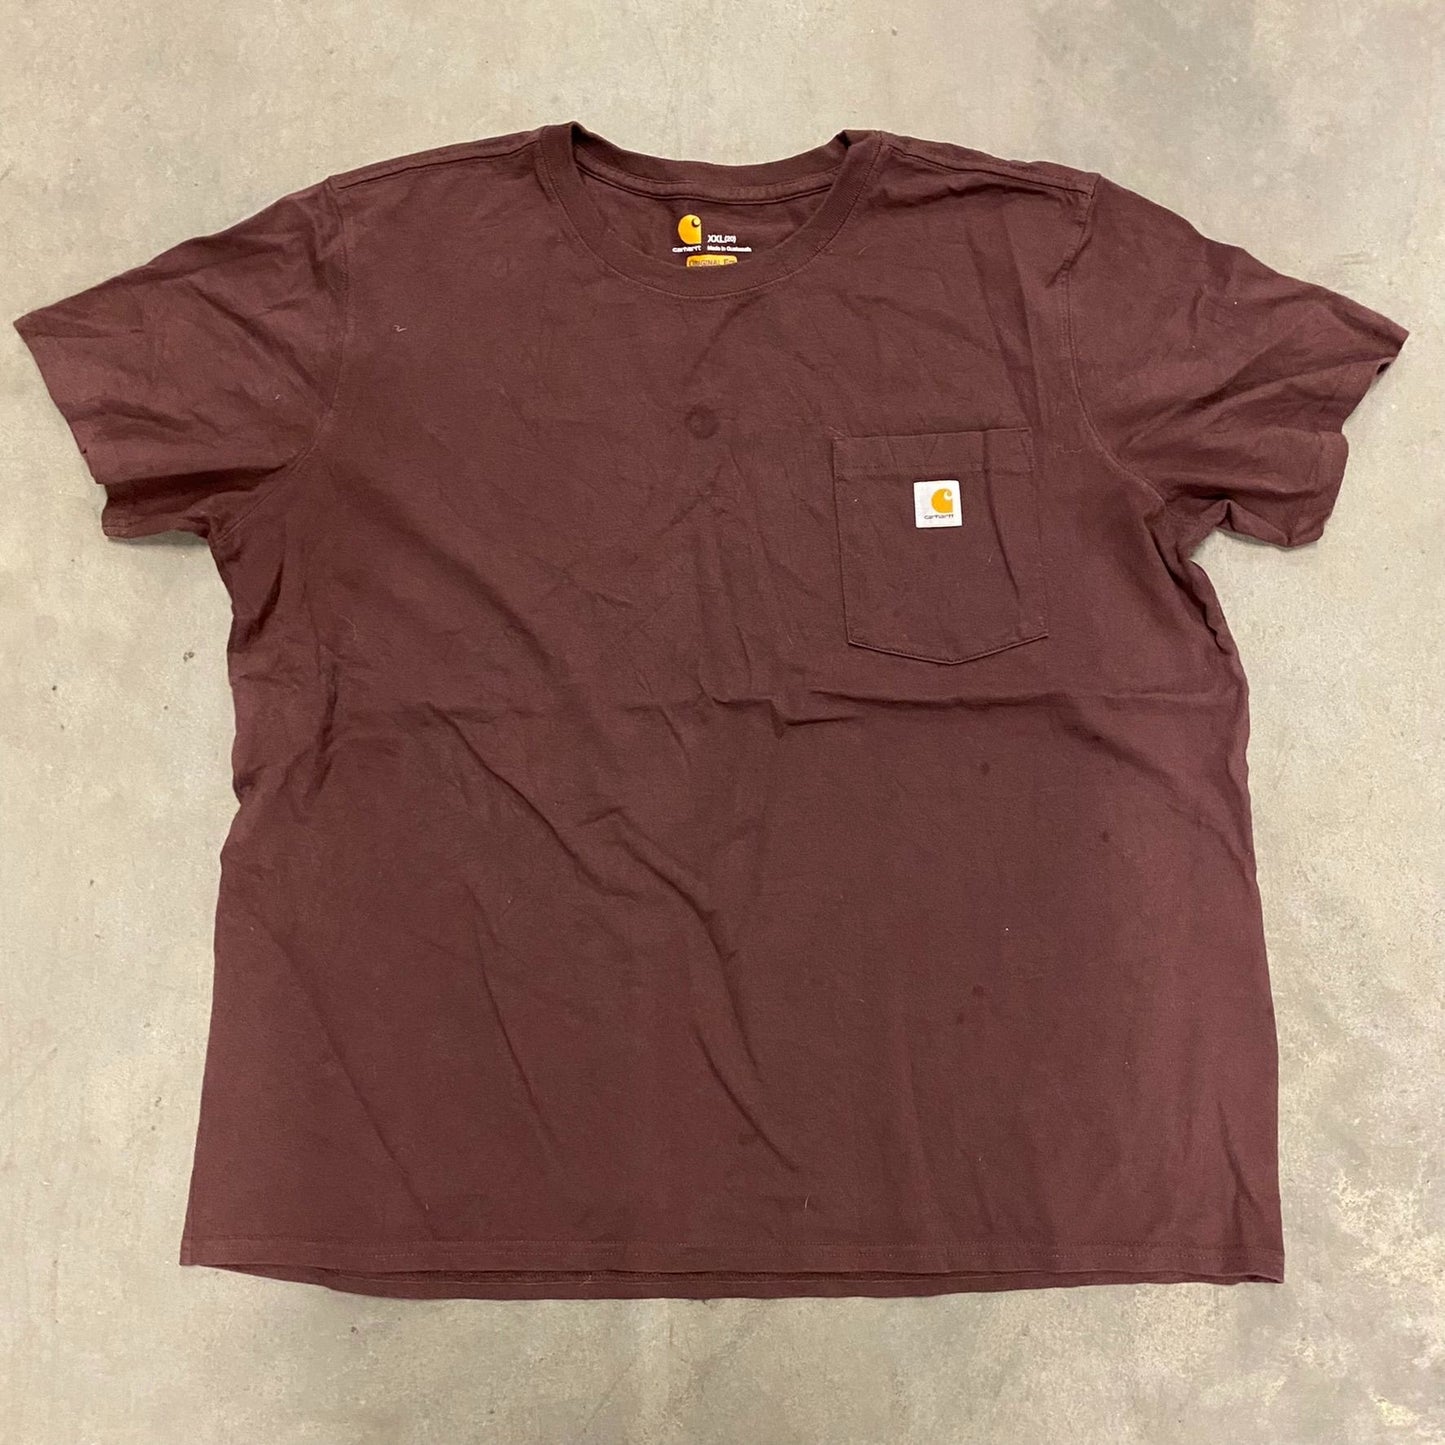 Carhartt Maroon Burgundy T-Shirt